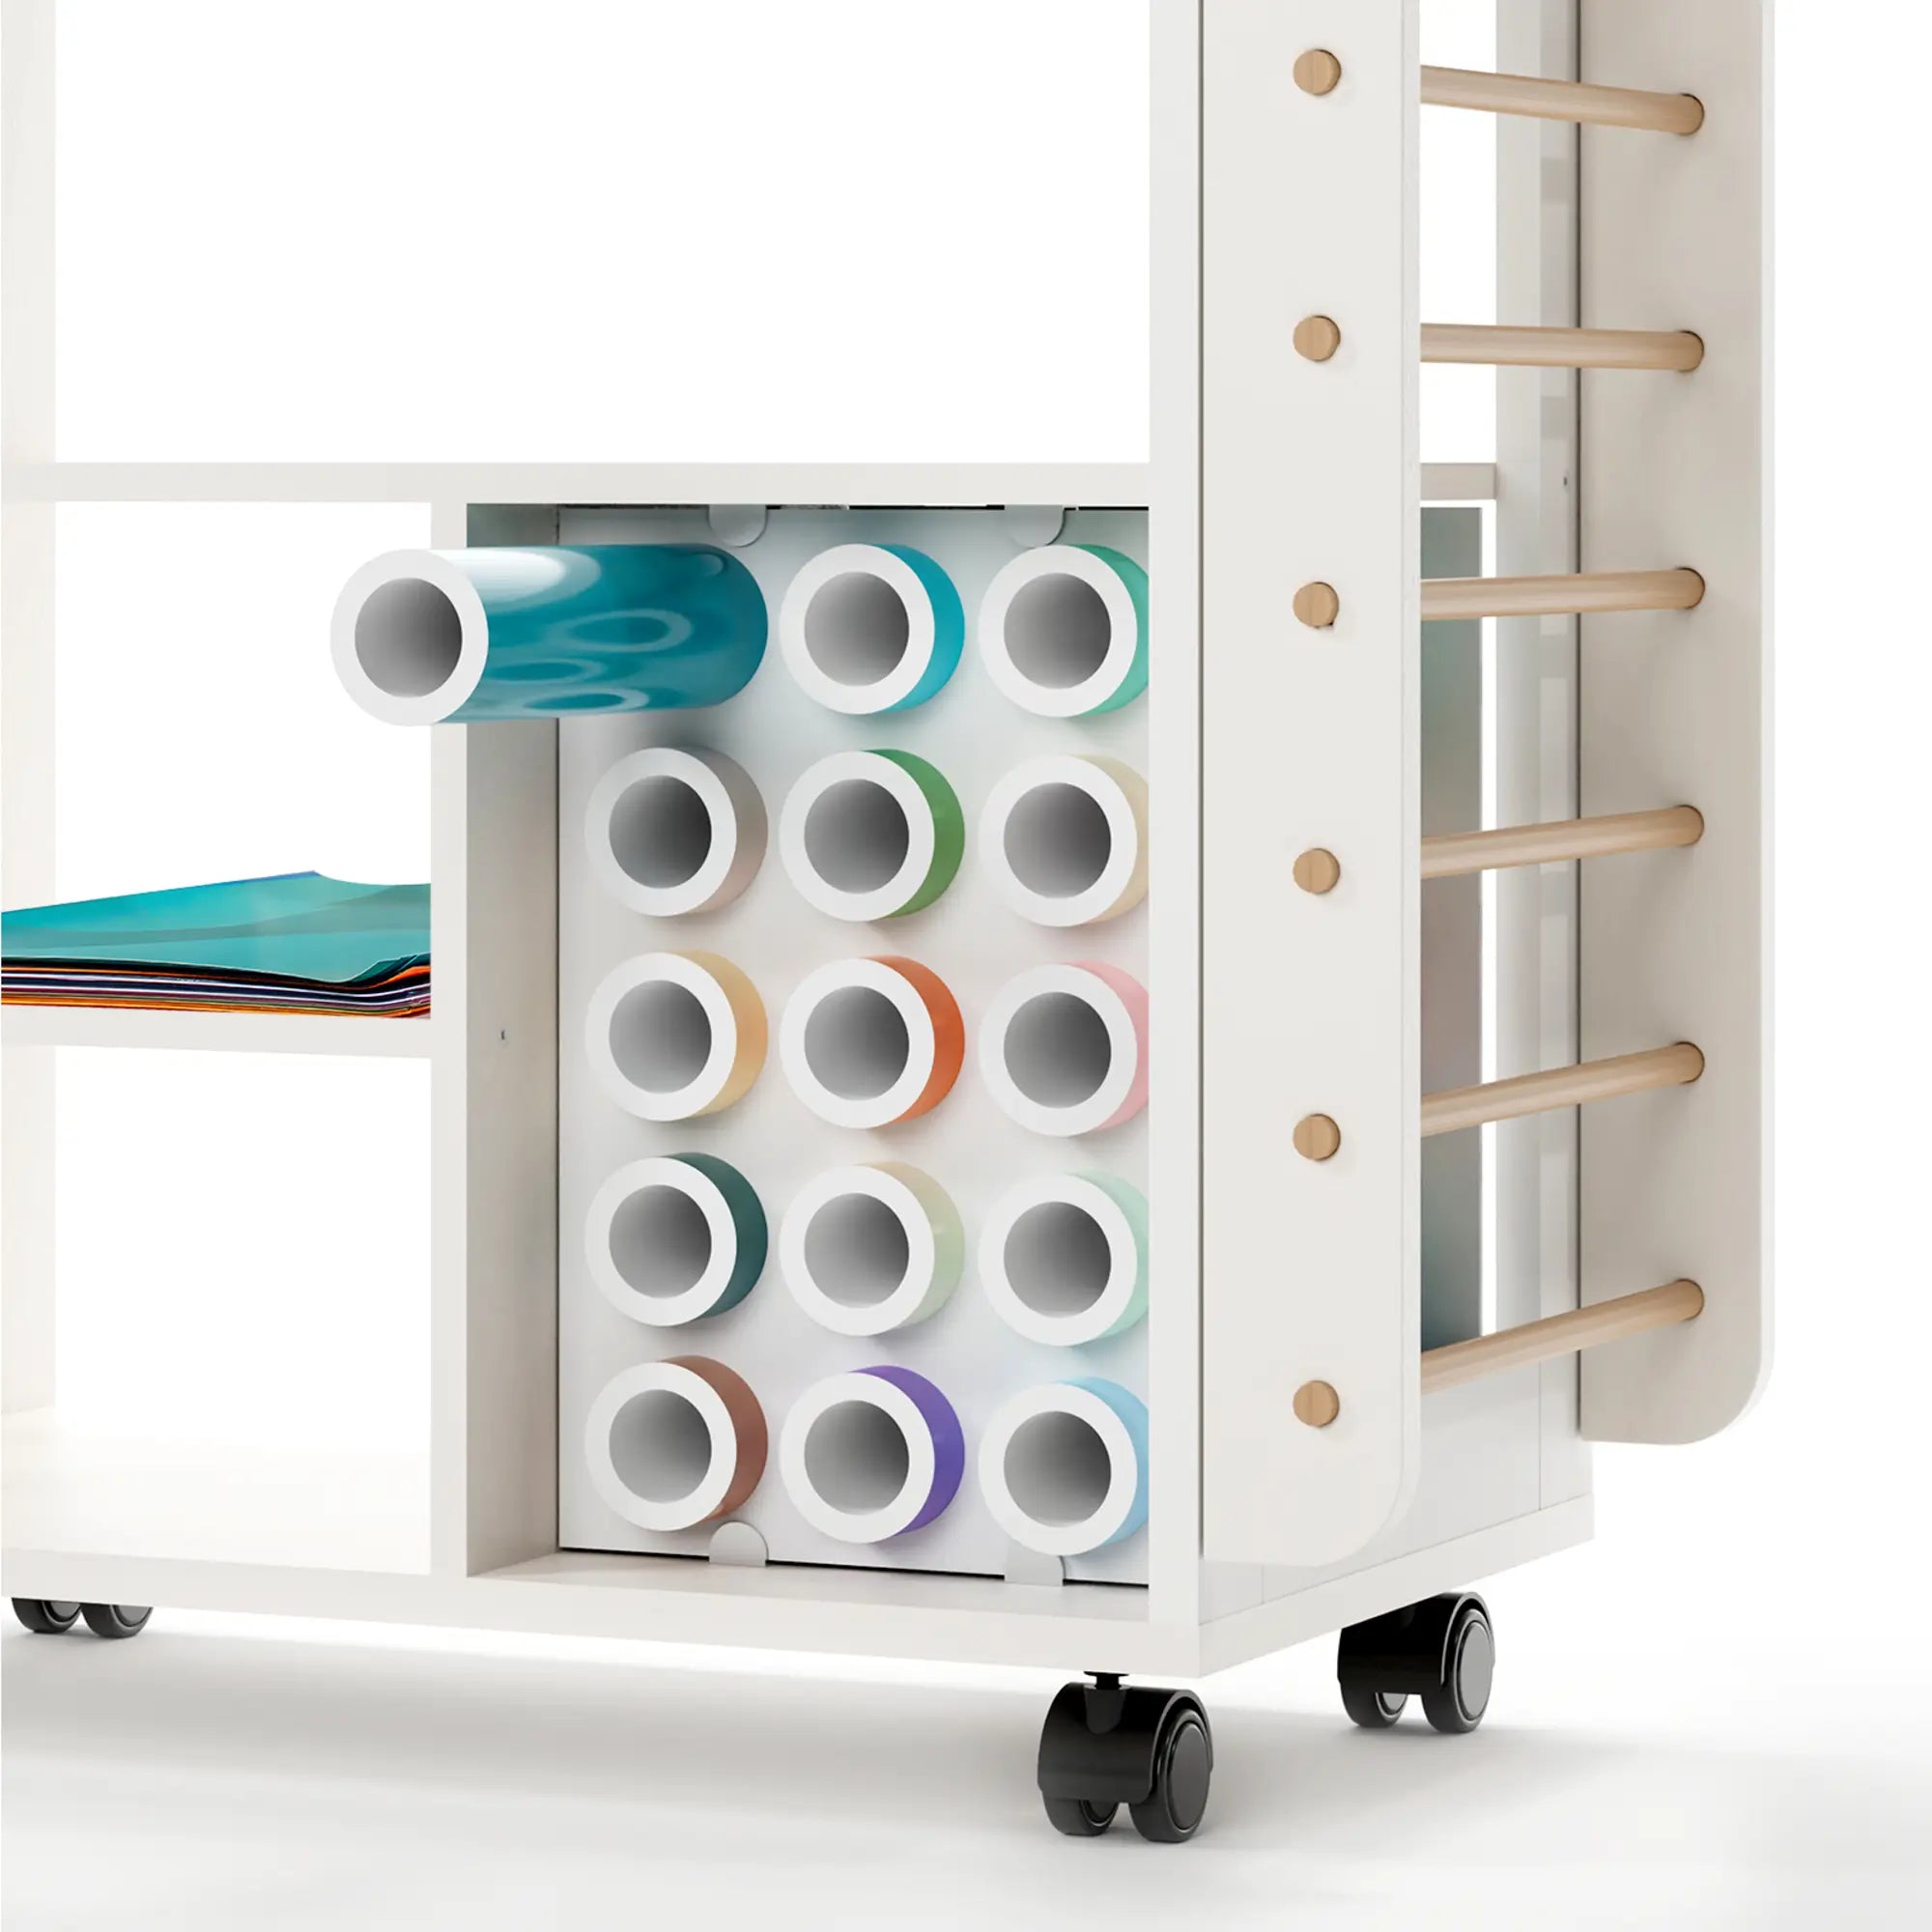 Crafit Craft Storage Cabinet Cart for Cricut